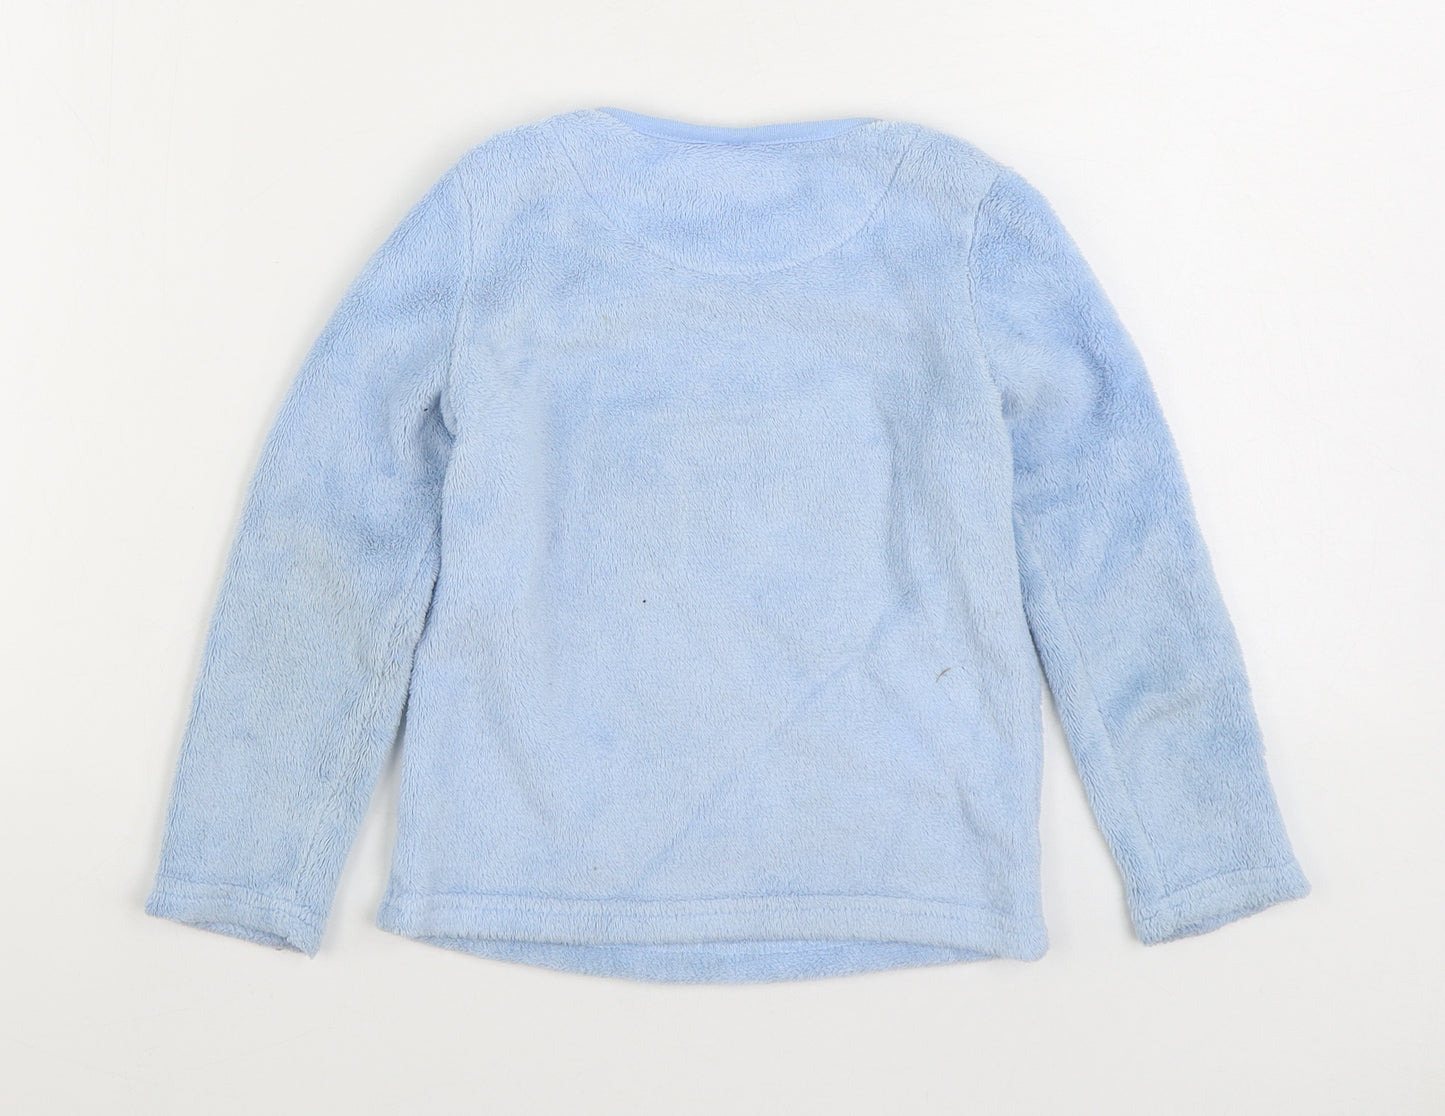 Primark Girls Blue Solid Cotton Top Pyjama Top Size 5-6 Years Pullover - Frozen Elsa